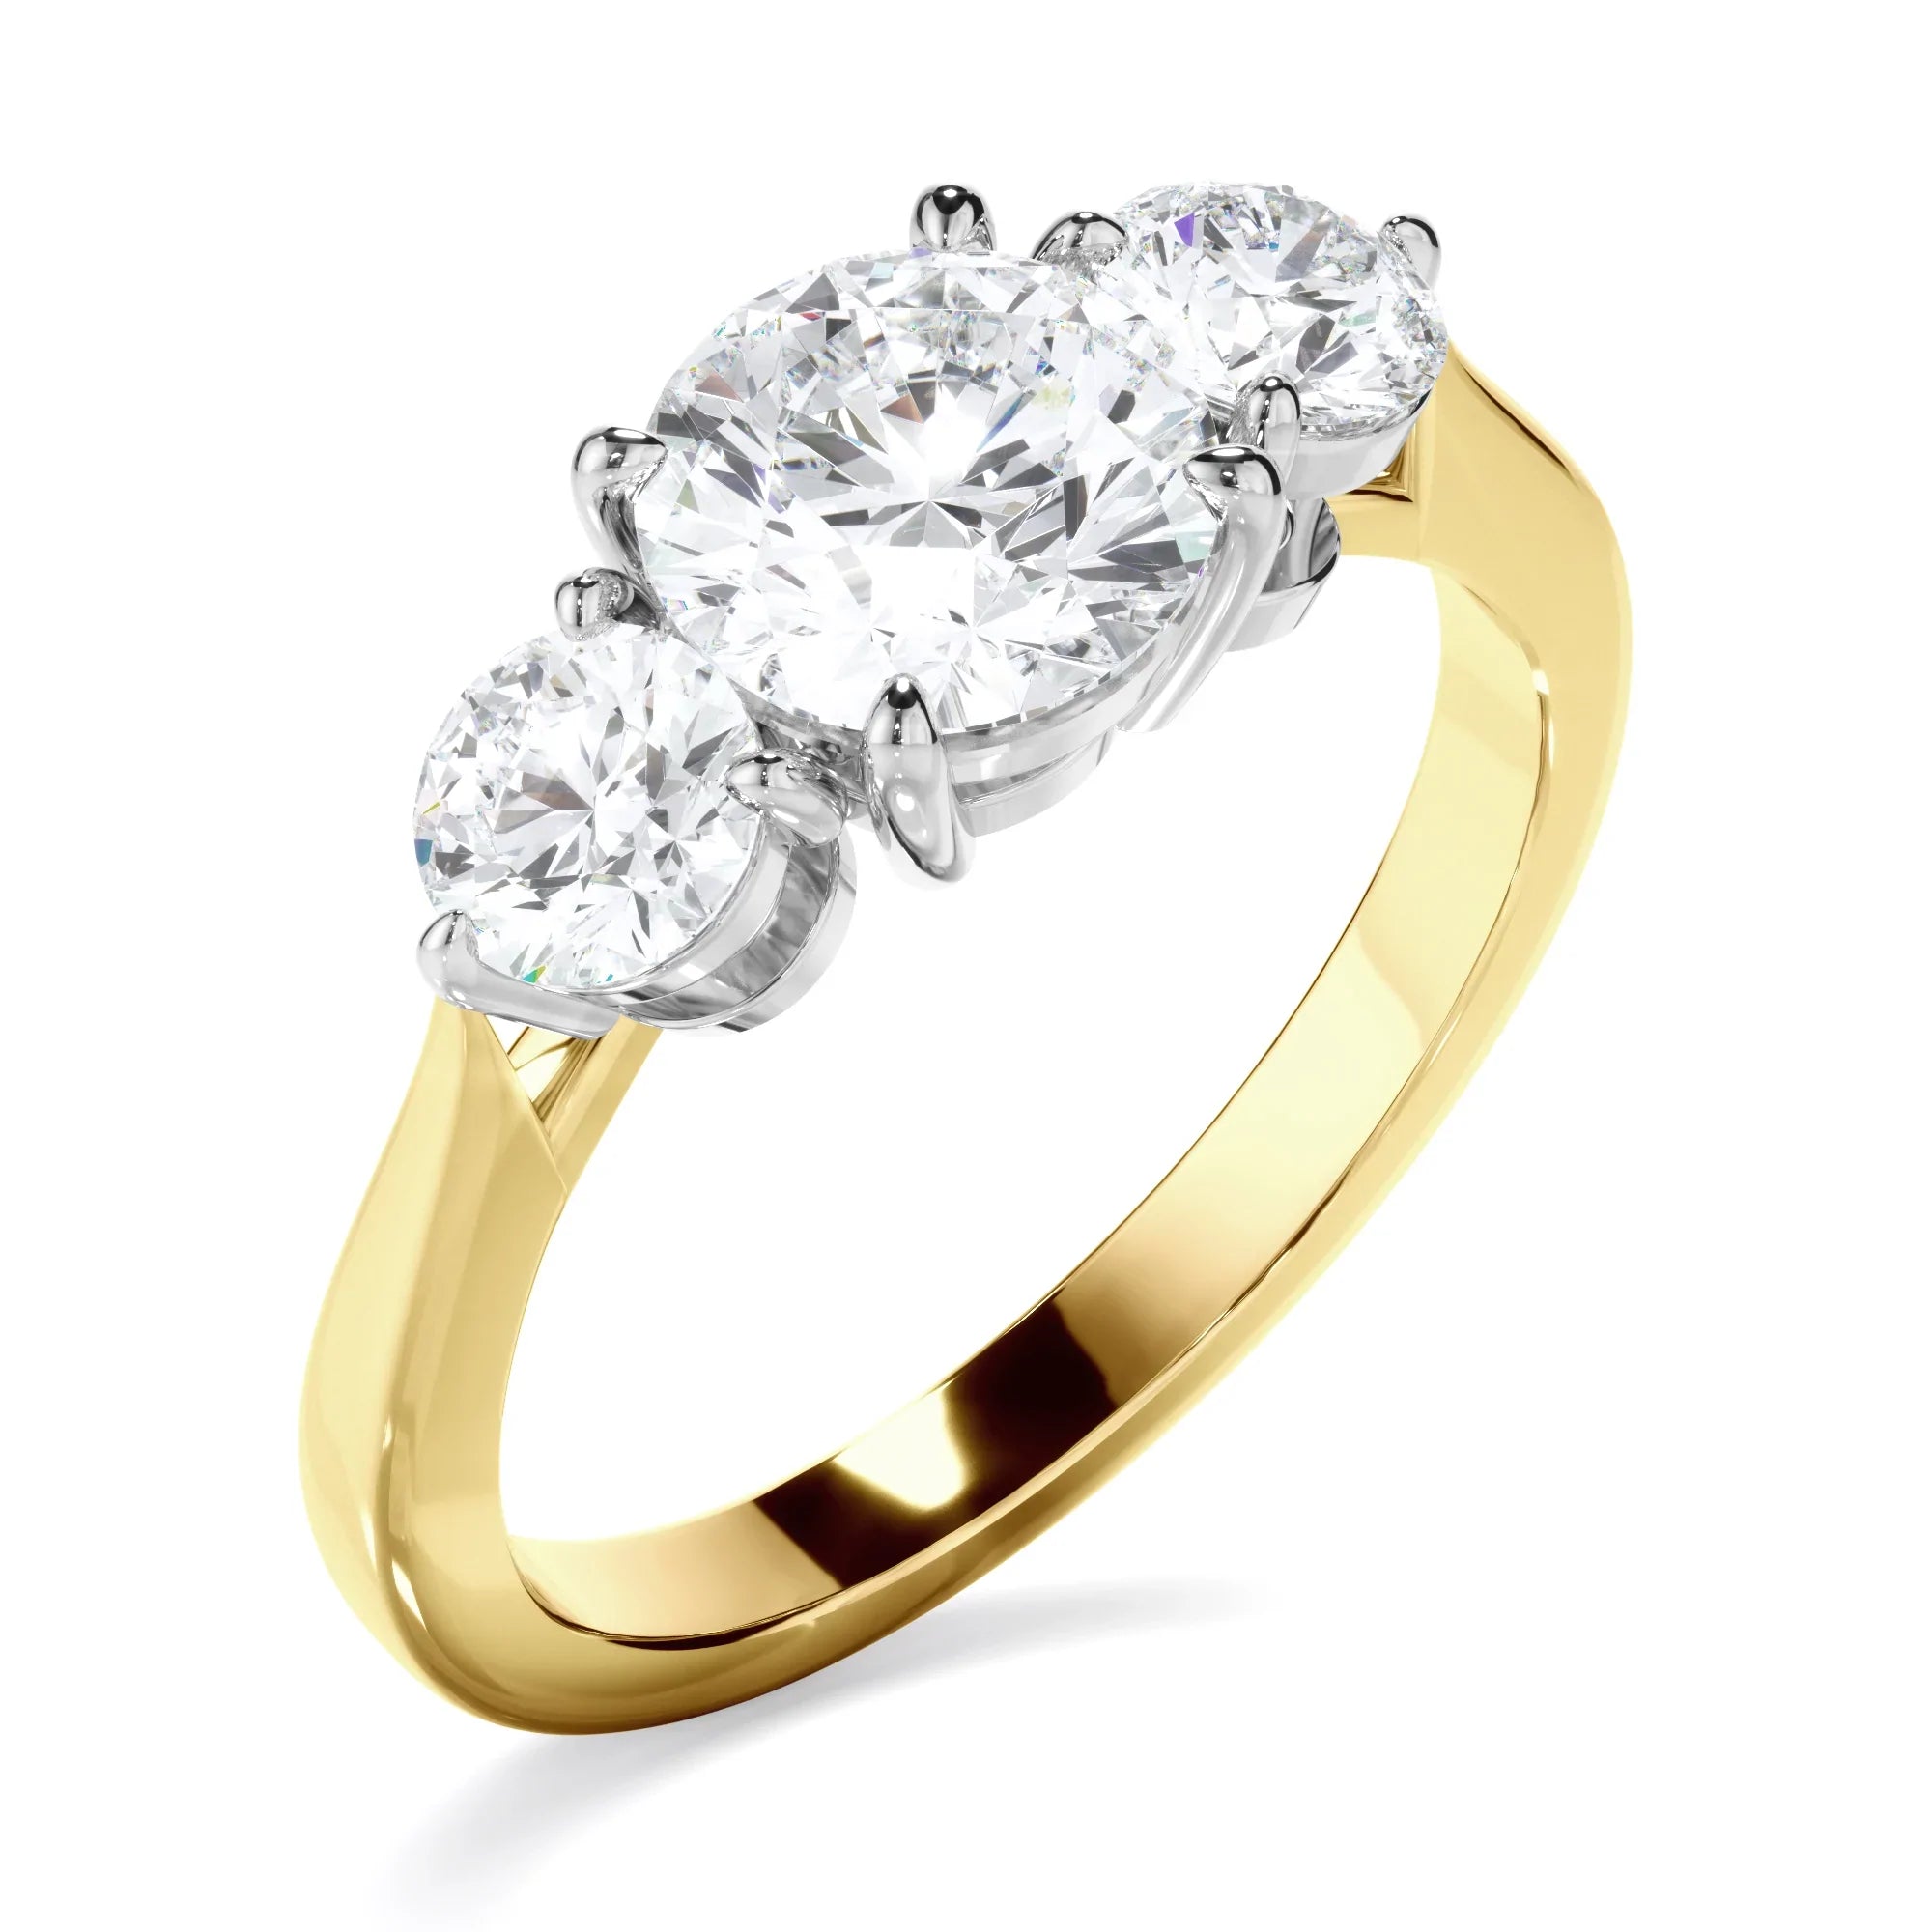 Round Brilliant Cut Diamond Trilogy Engagement Ring